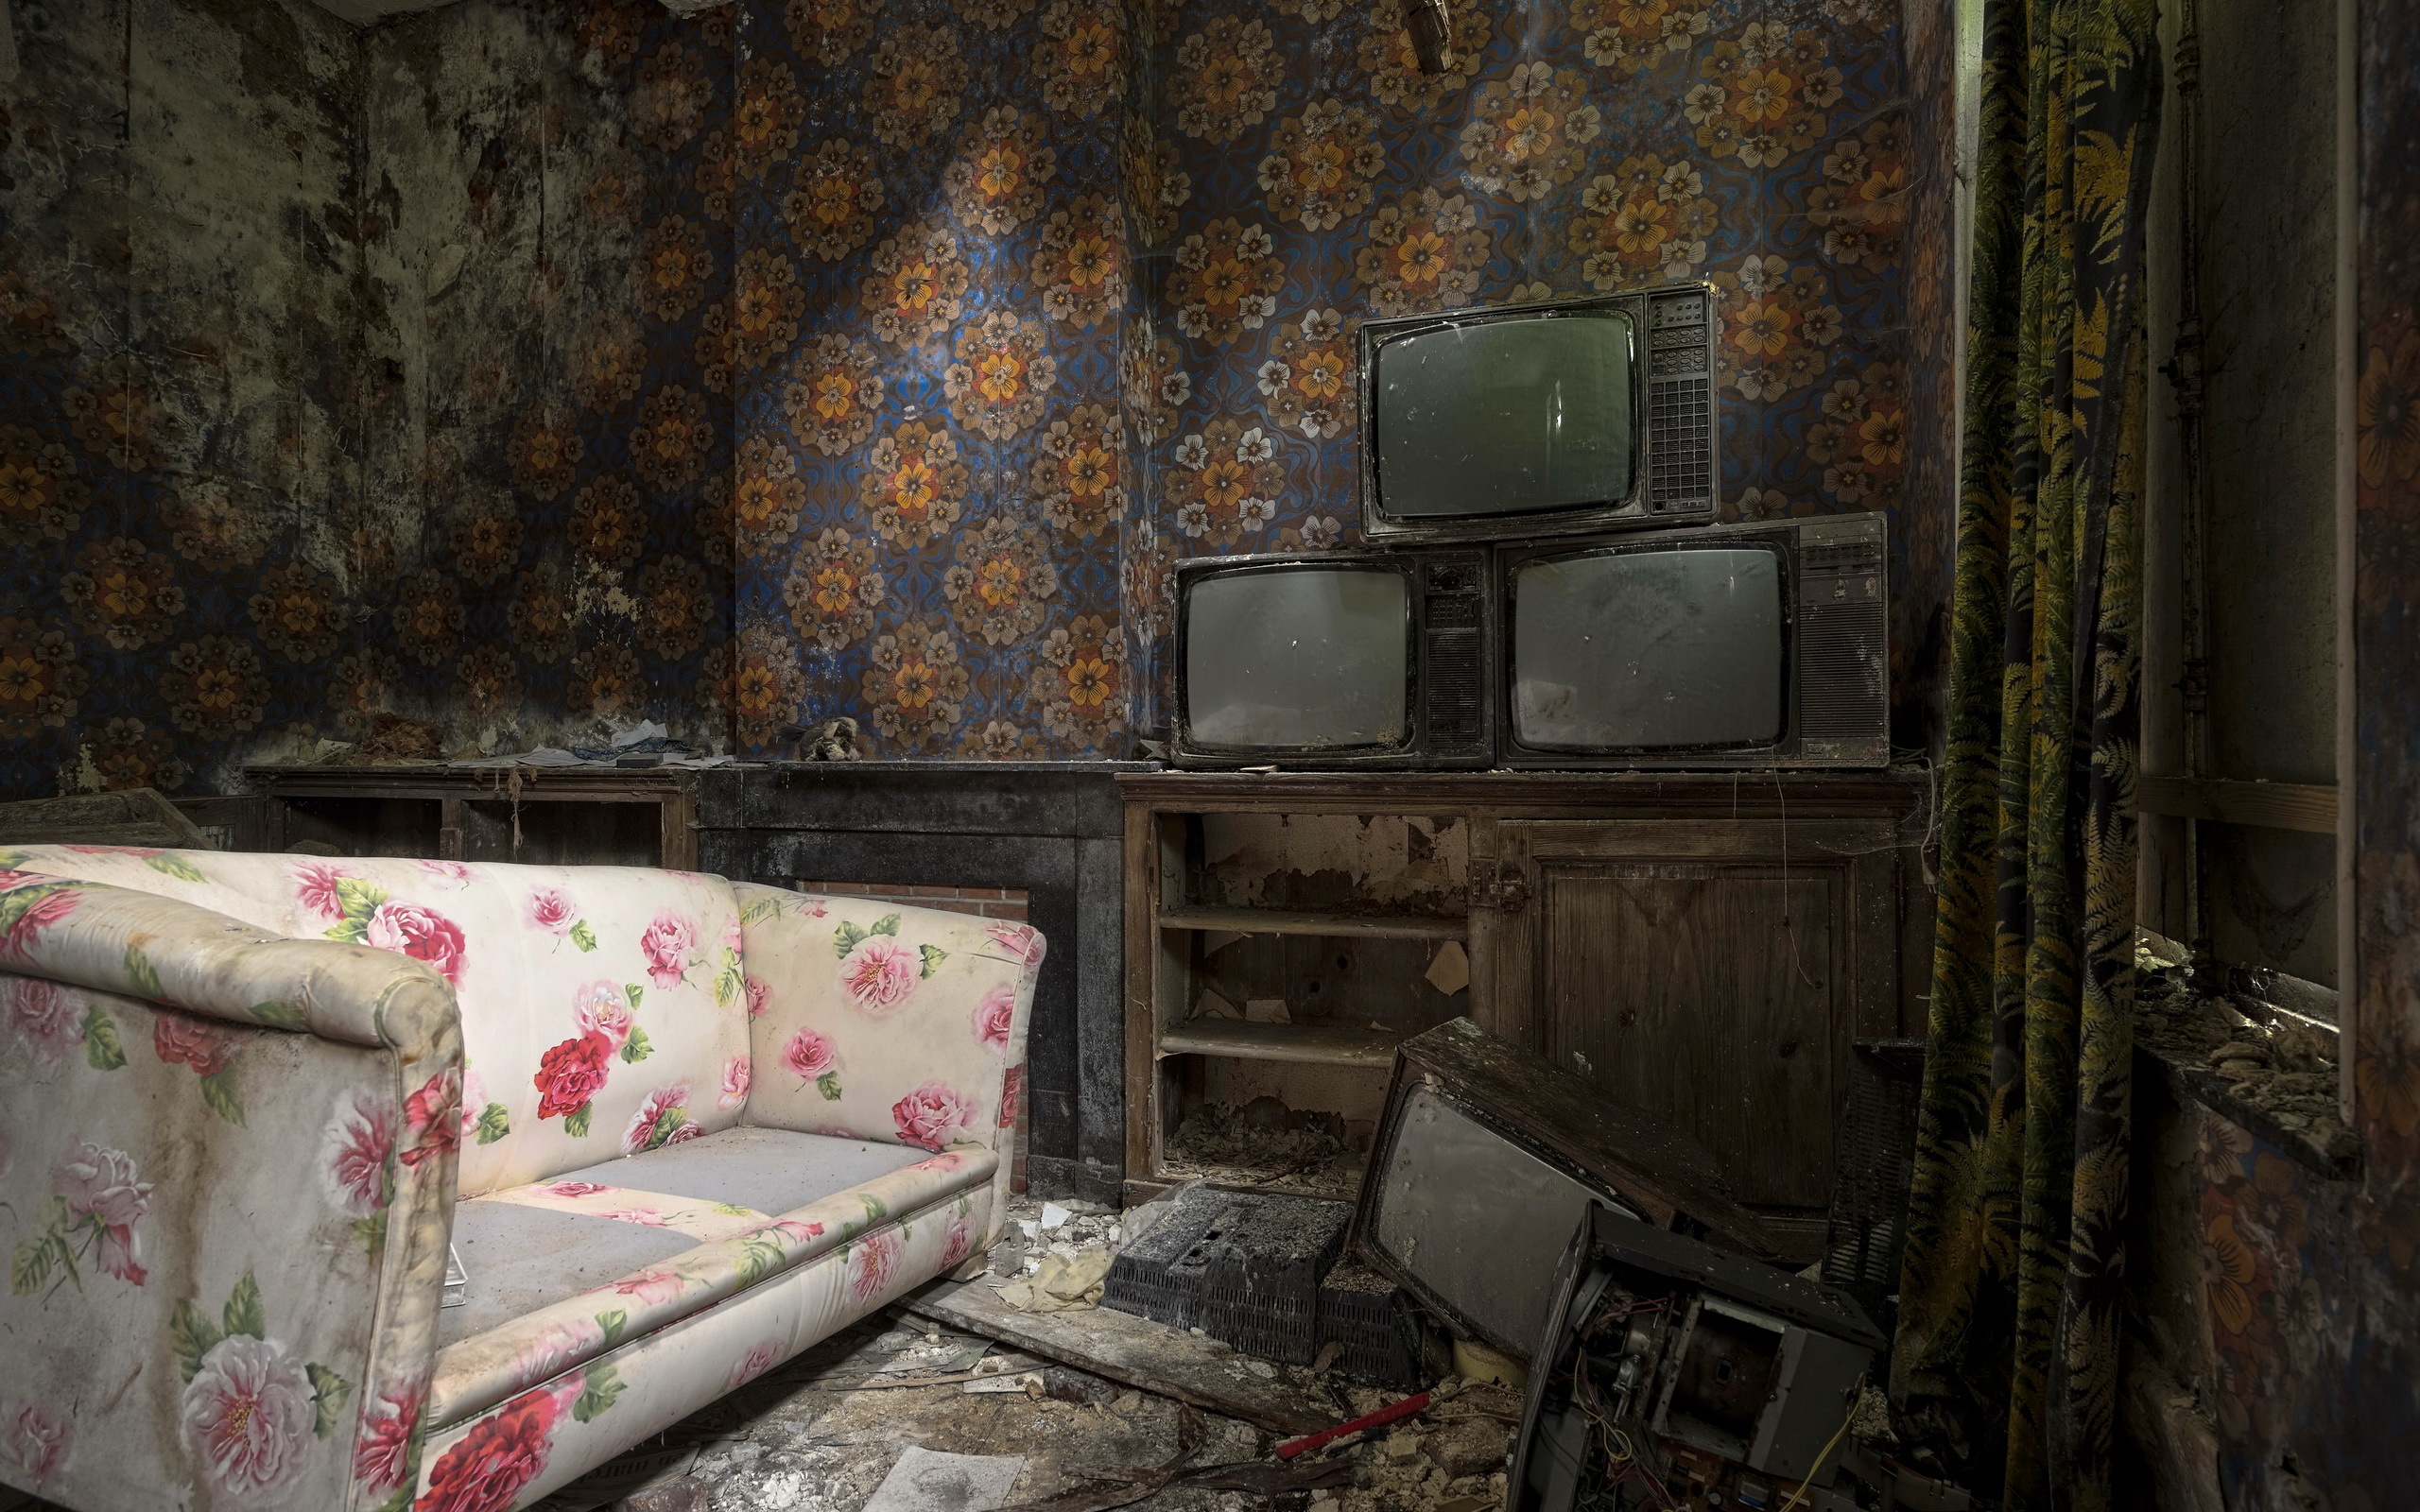 Советская хата. Старинная комната. Старая квартира. Старинный интерьер комнаты. Старый телевизор в комнате.